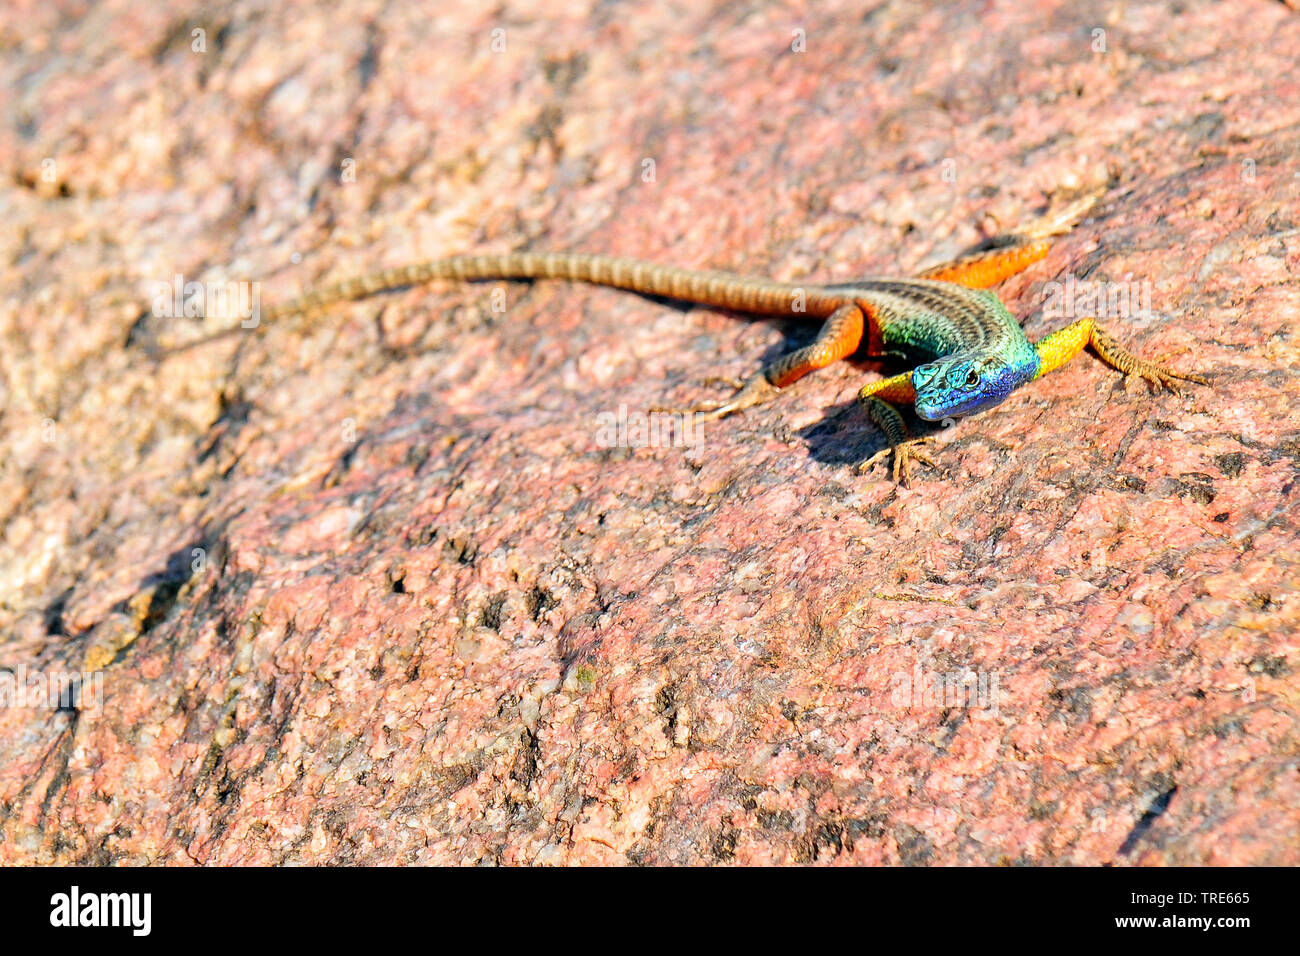 Broadley's flat lizard, Augrabies flat lizard (Platysaurus broadleyi), on a rock, South Africa Stock Photo